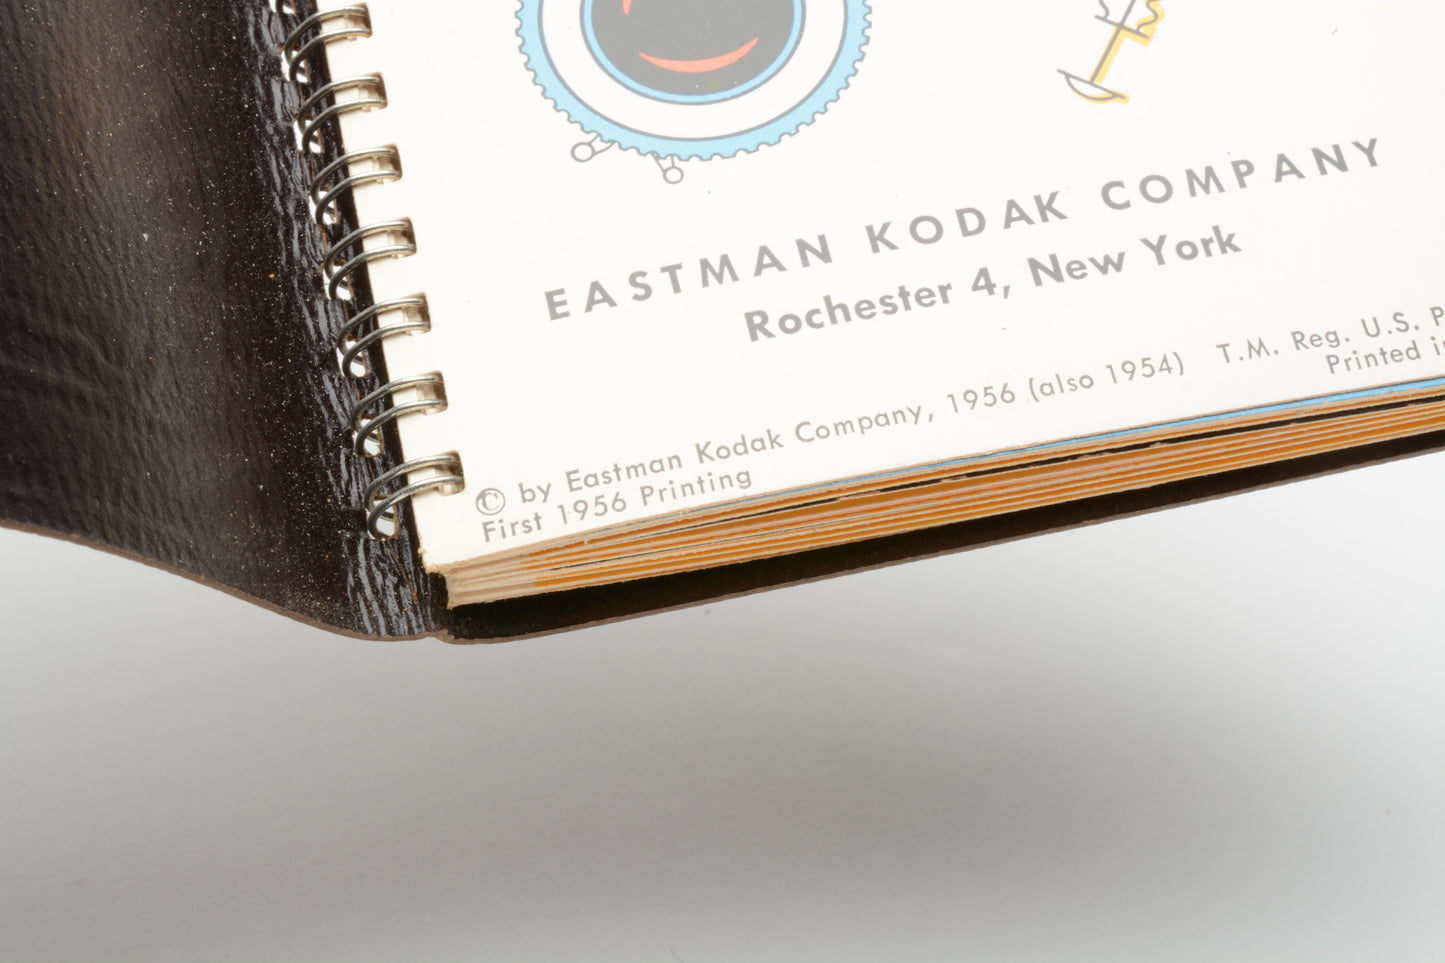 Kodak Master Photoguide pocket guide First 1956 Printing